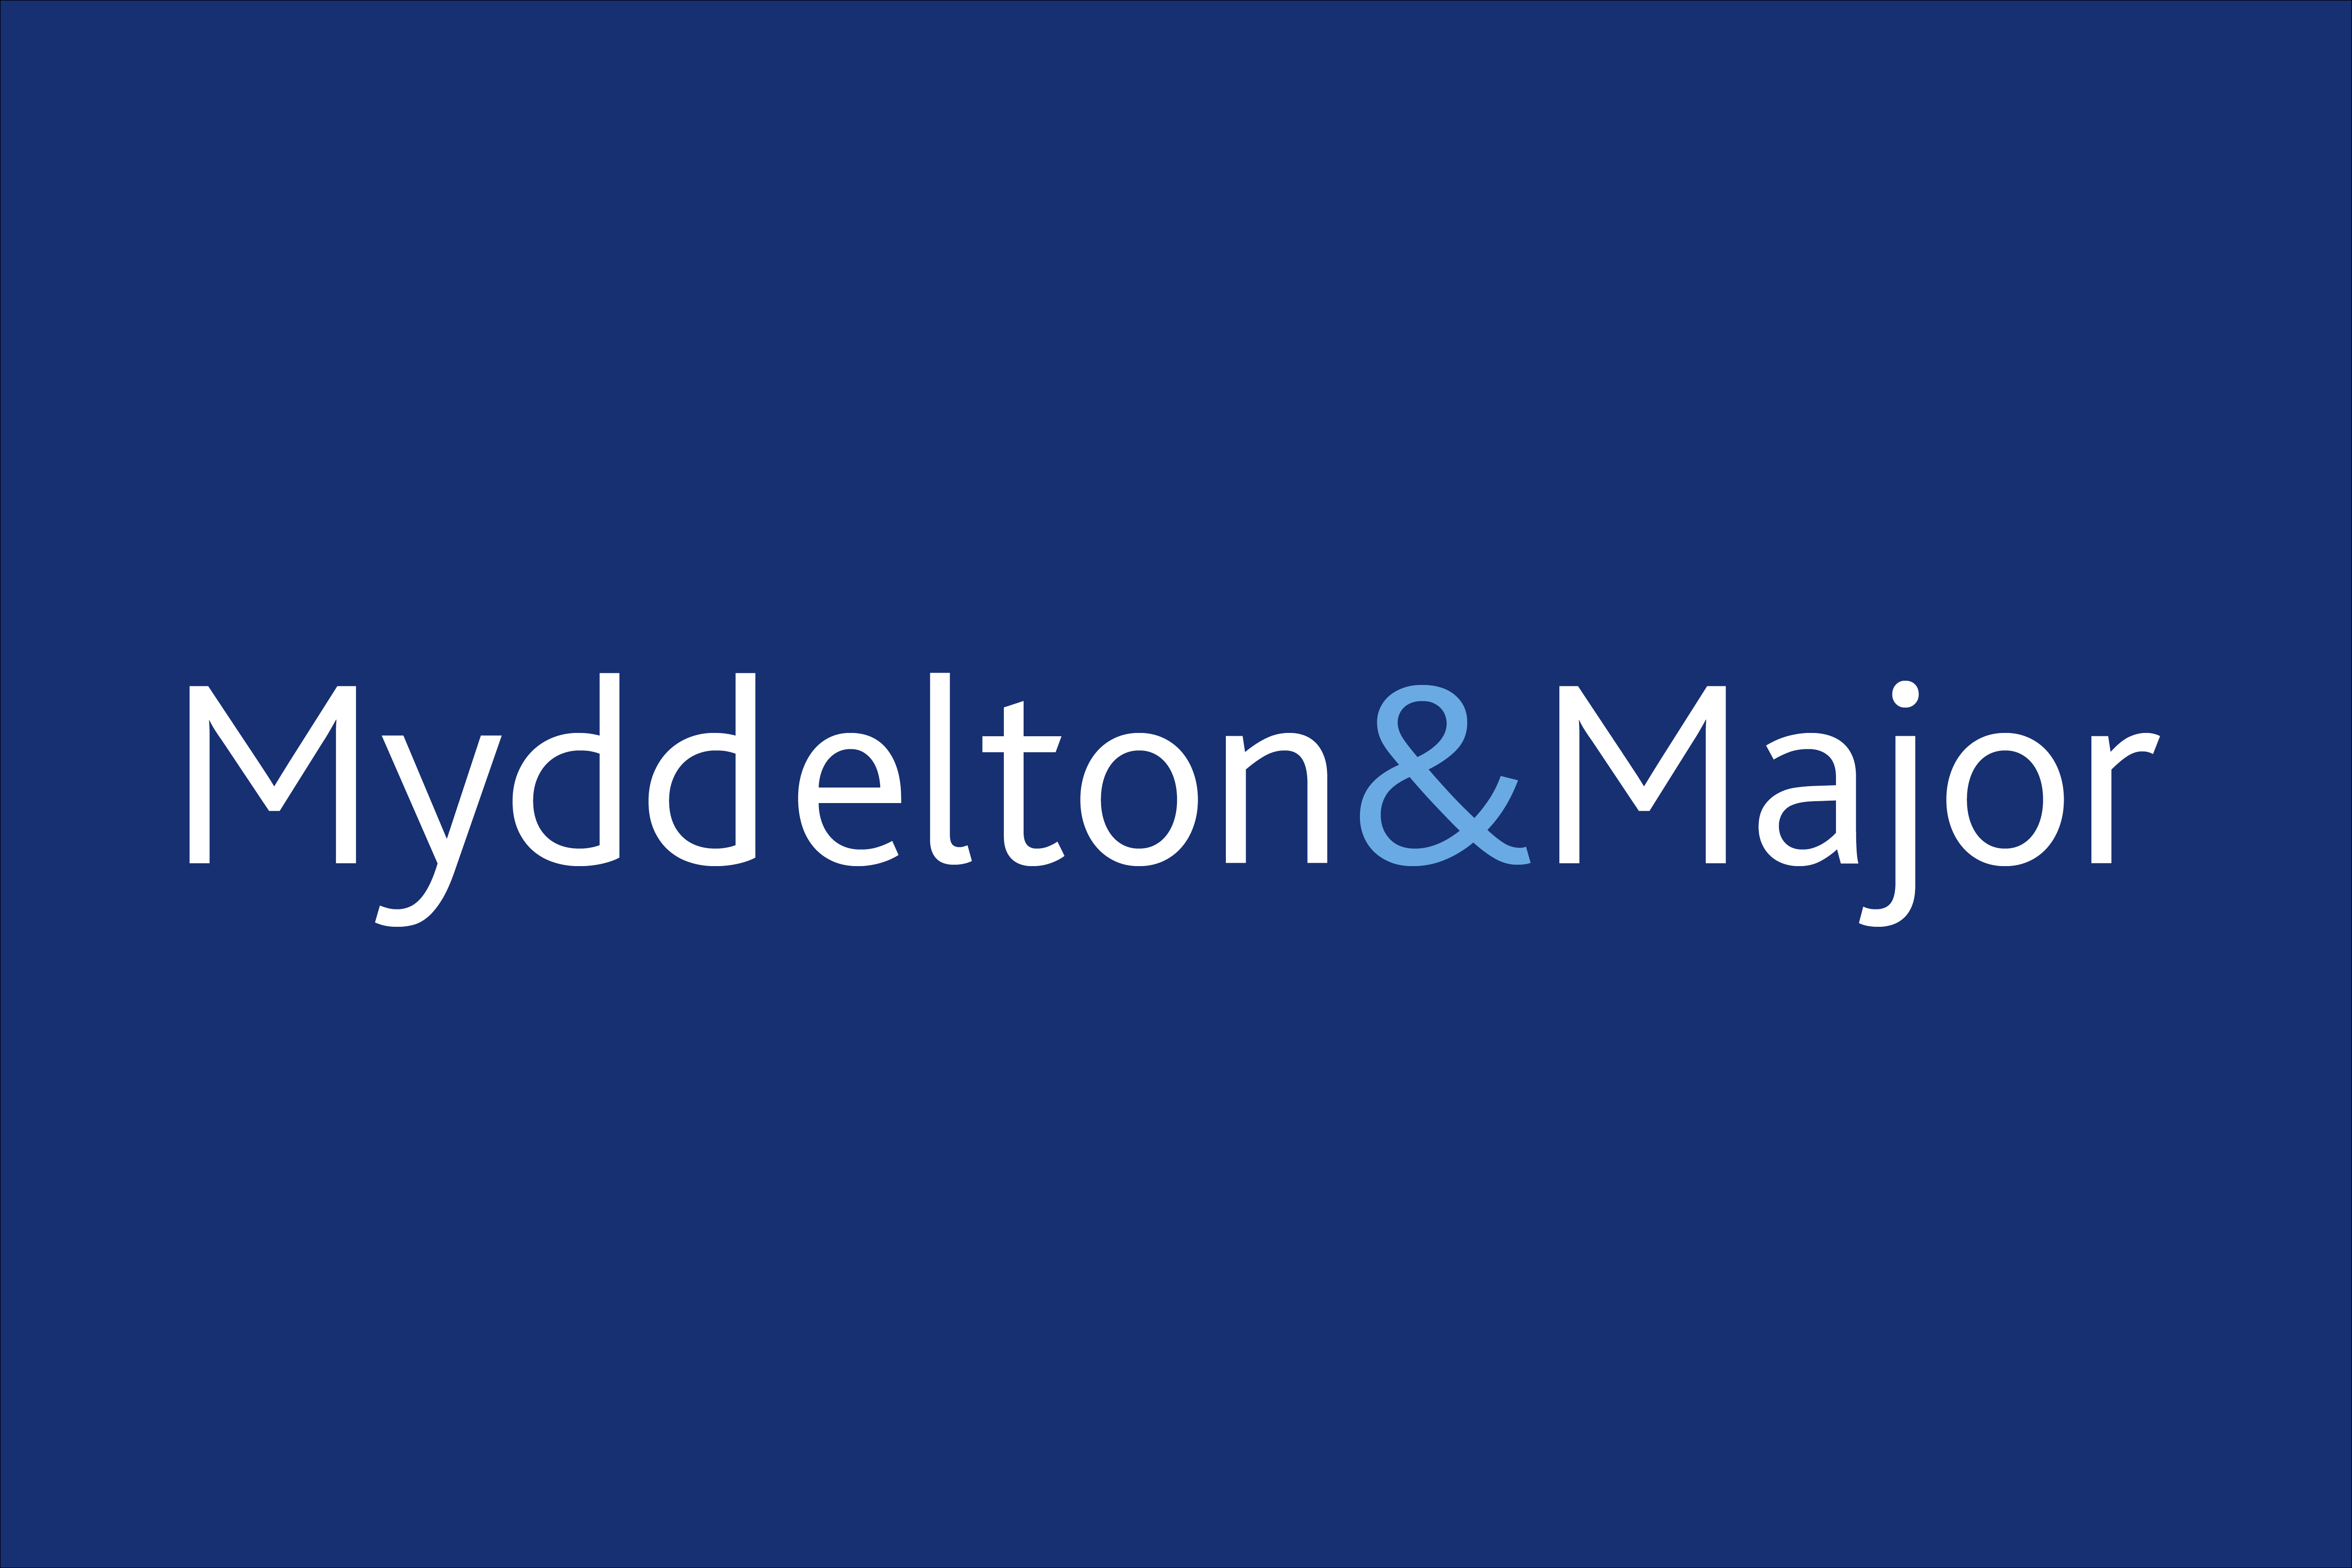 Myddelton & Major